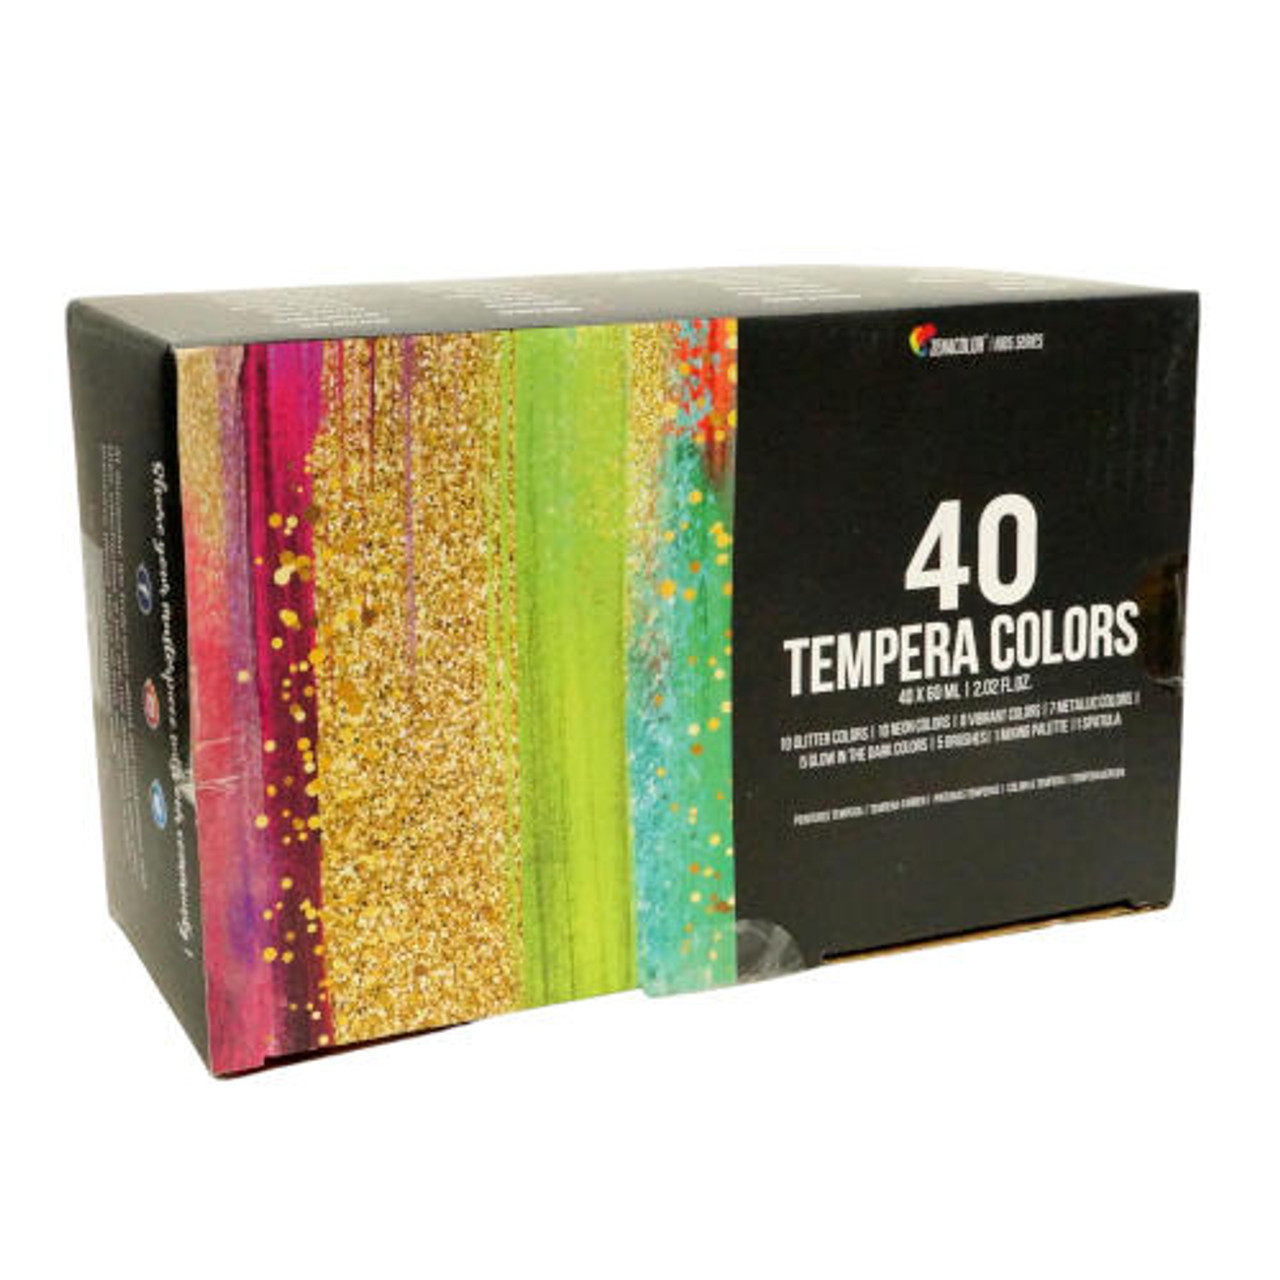 Pro Art 2-Ounce 6 Color Tempera Paint Set Regular Colors